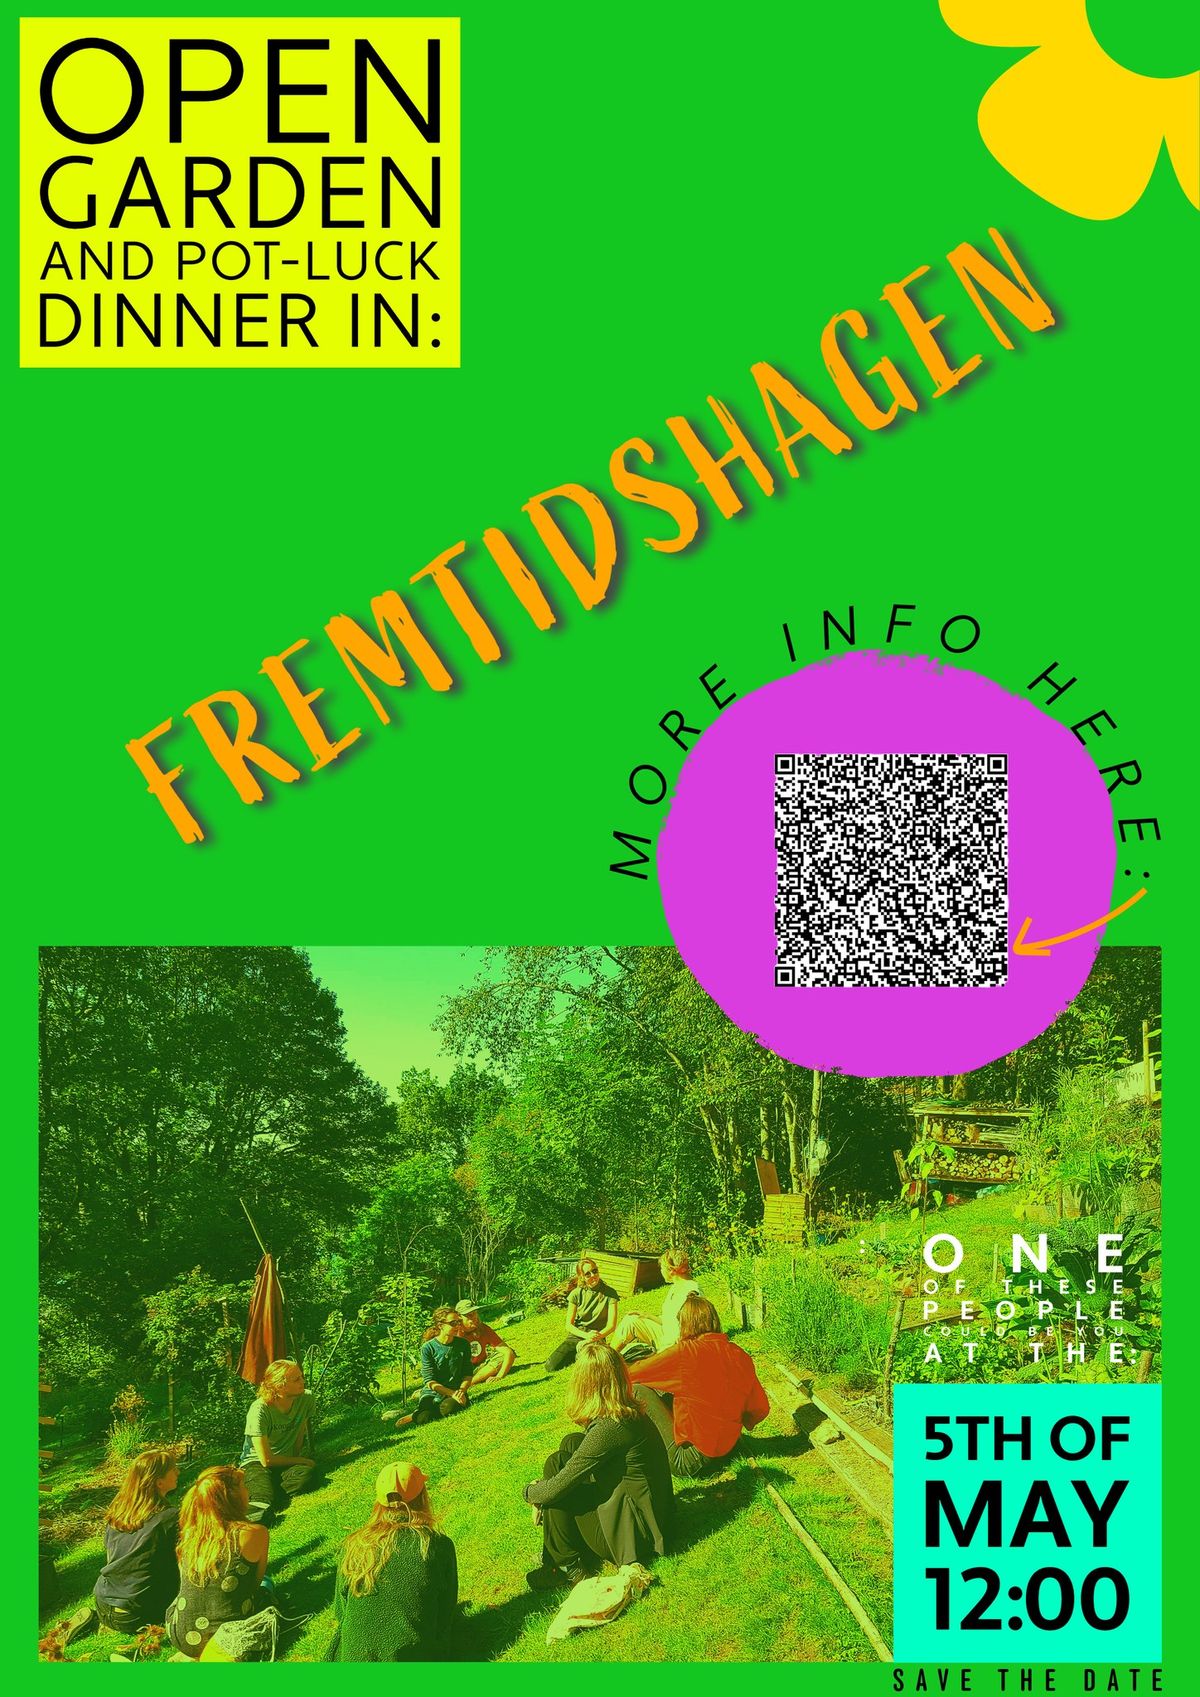 Open garden and pot-luck dinner in Fremtidshagen!